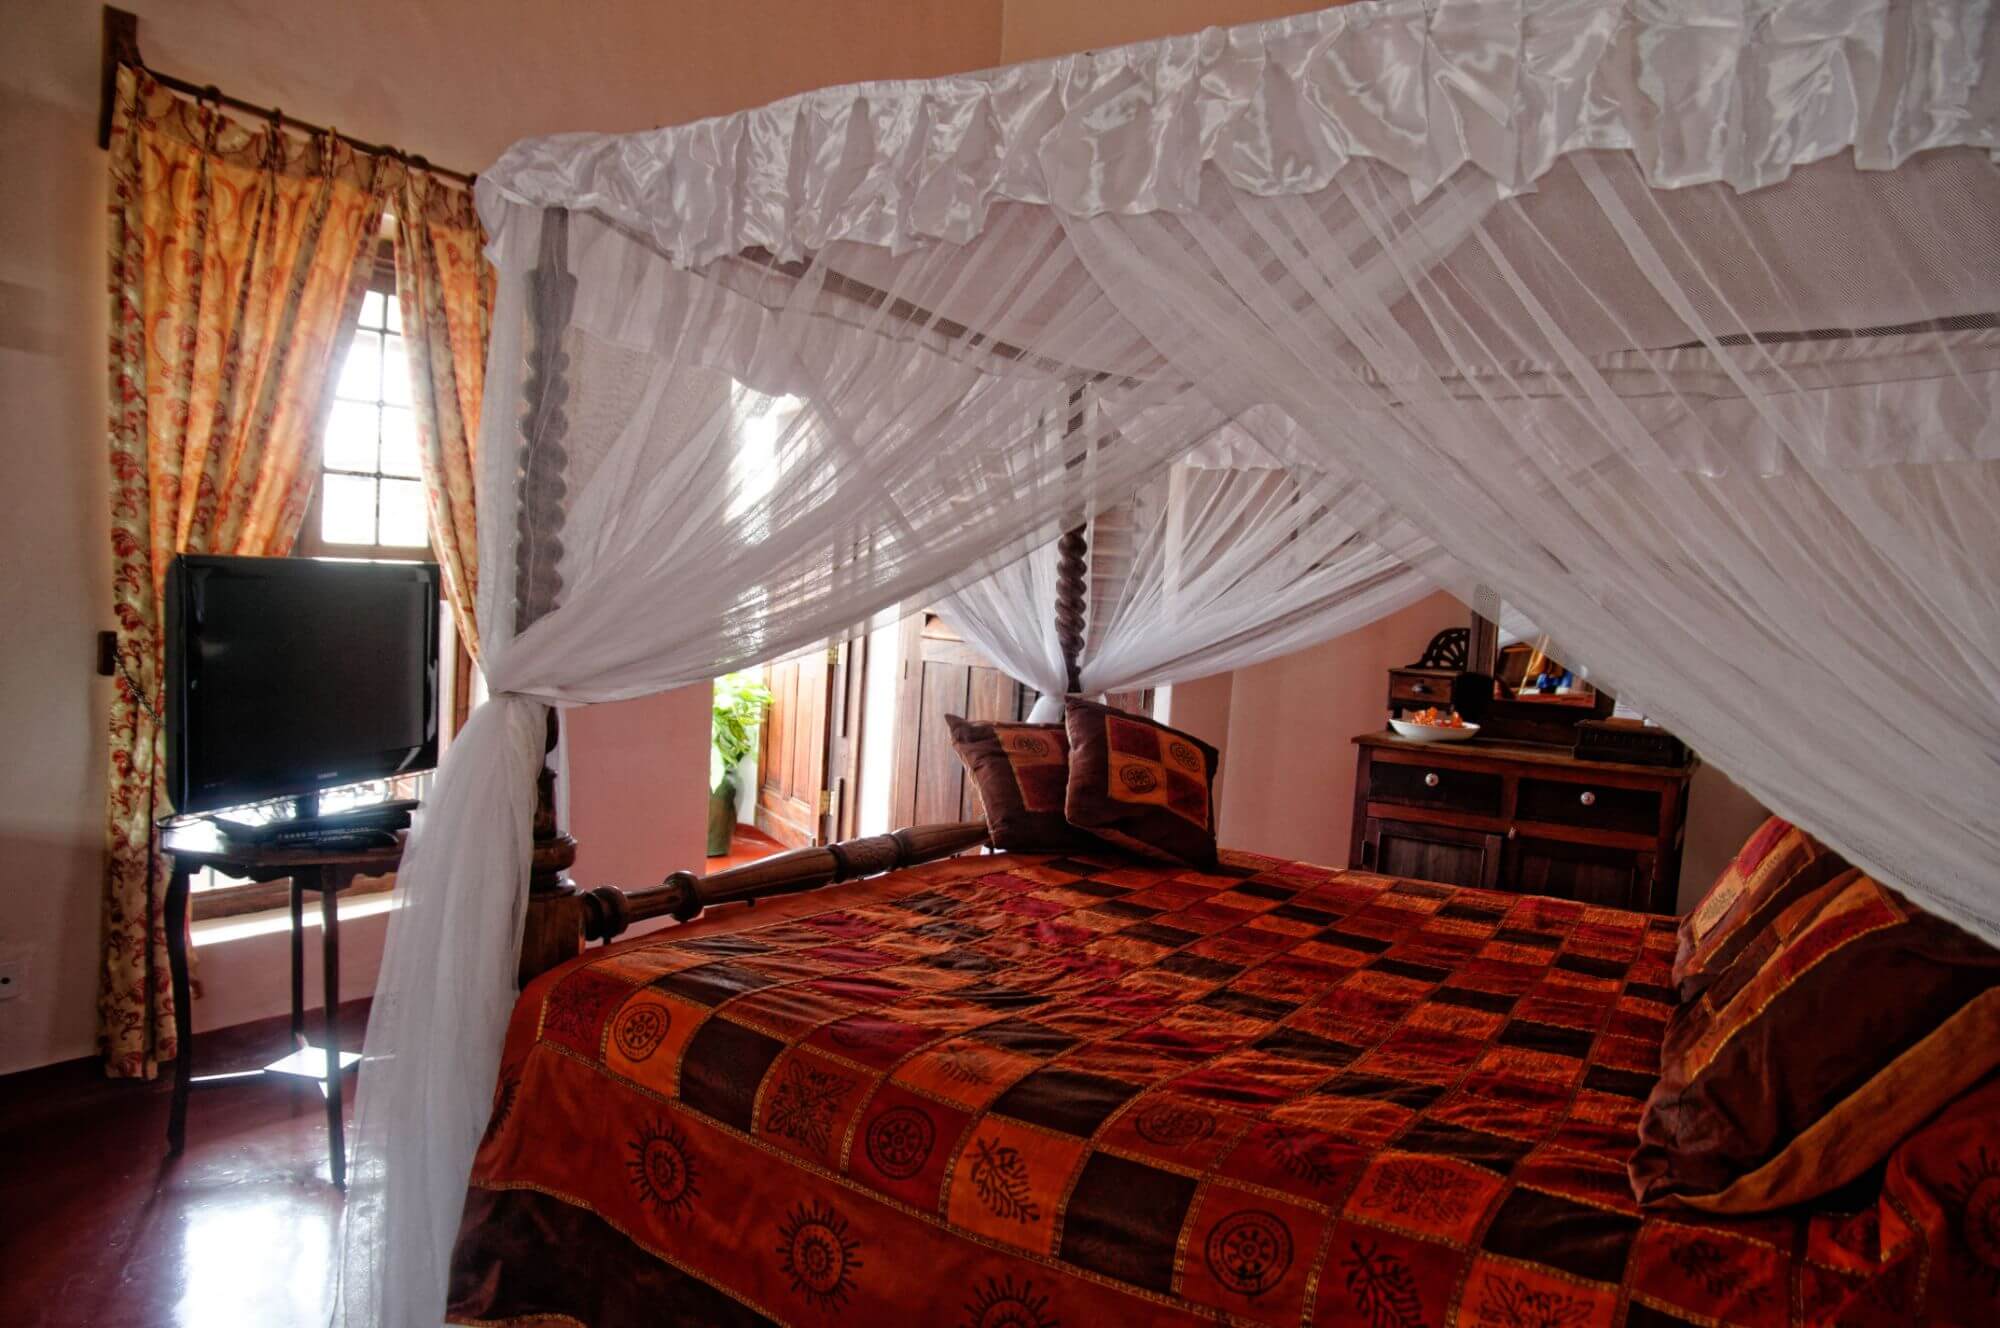 Zanzibar Palace Hotel - Room (6)